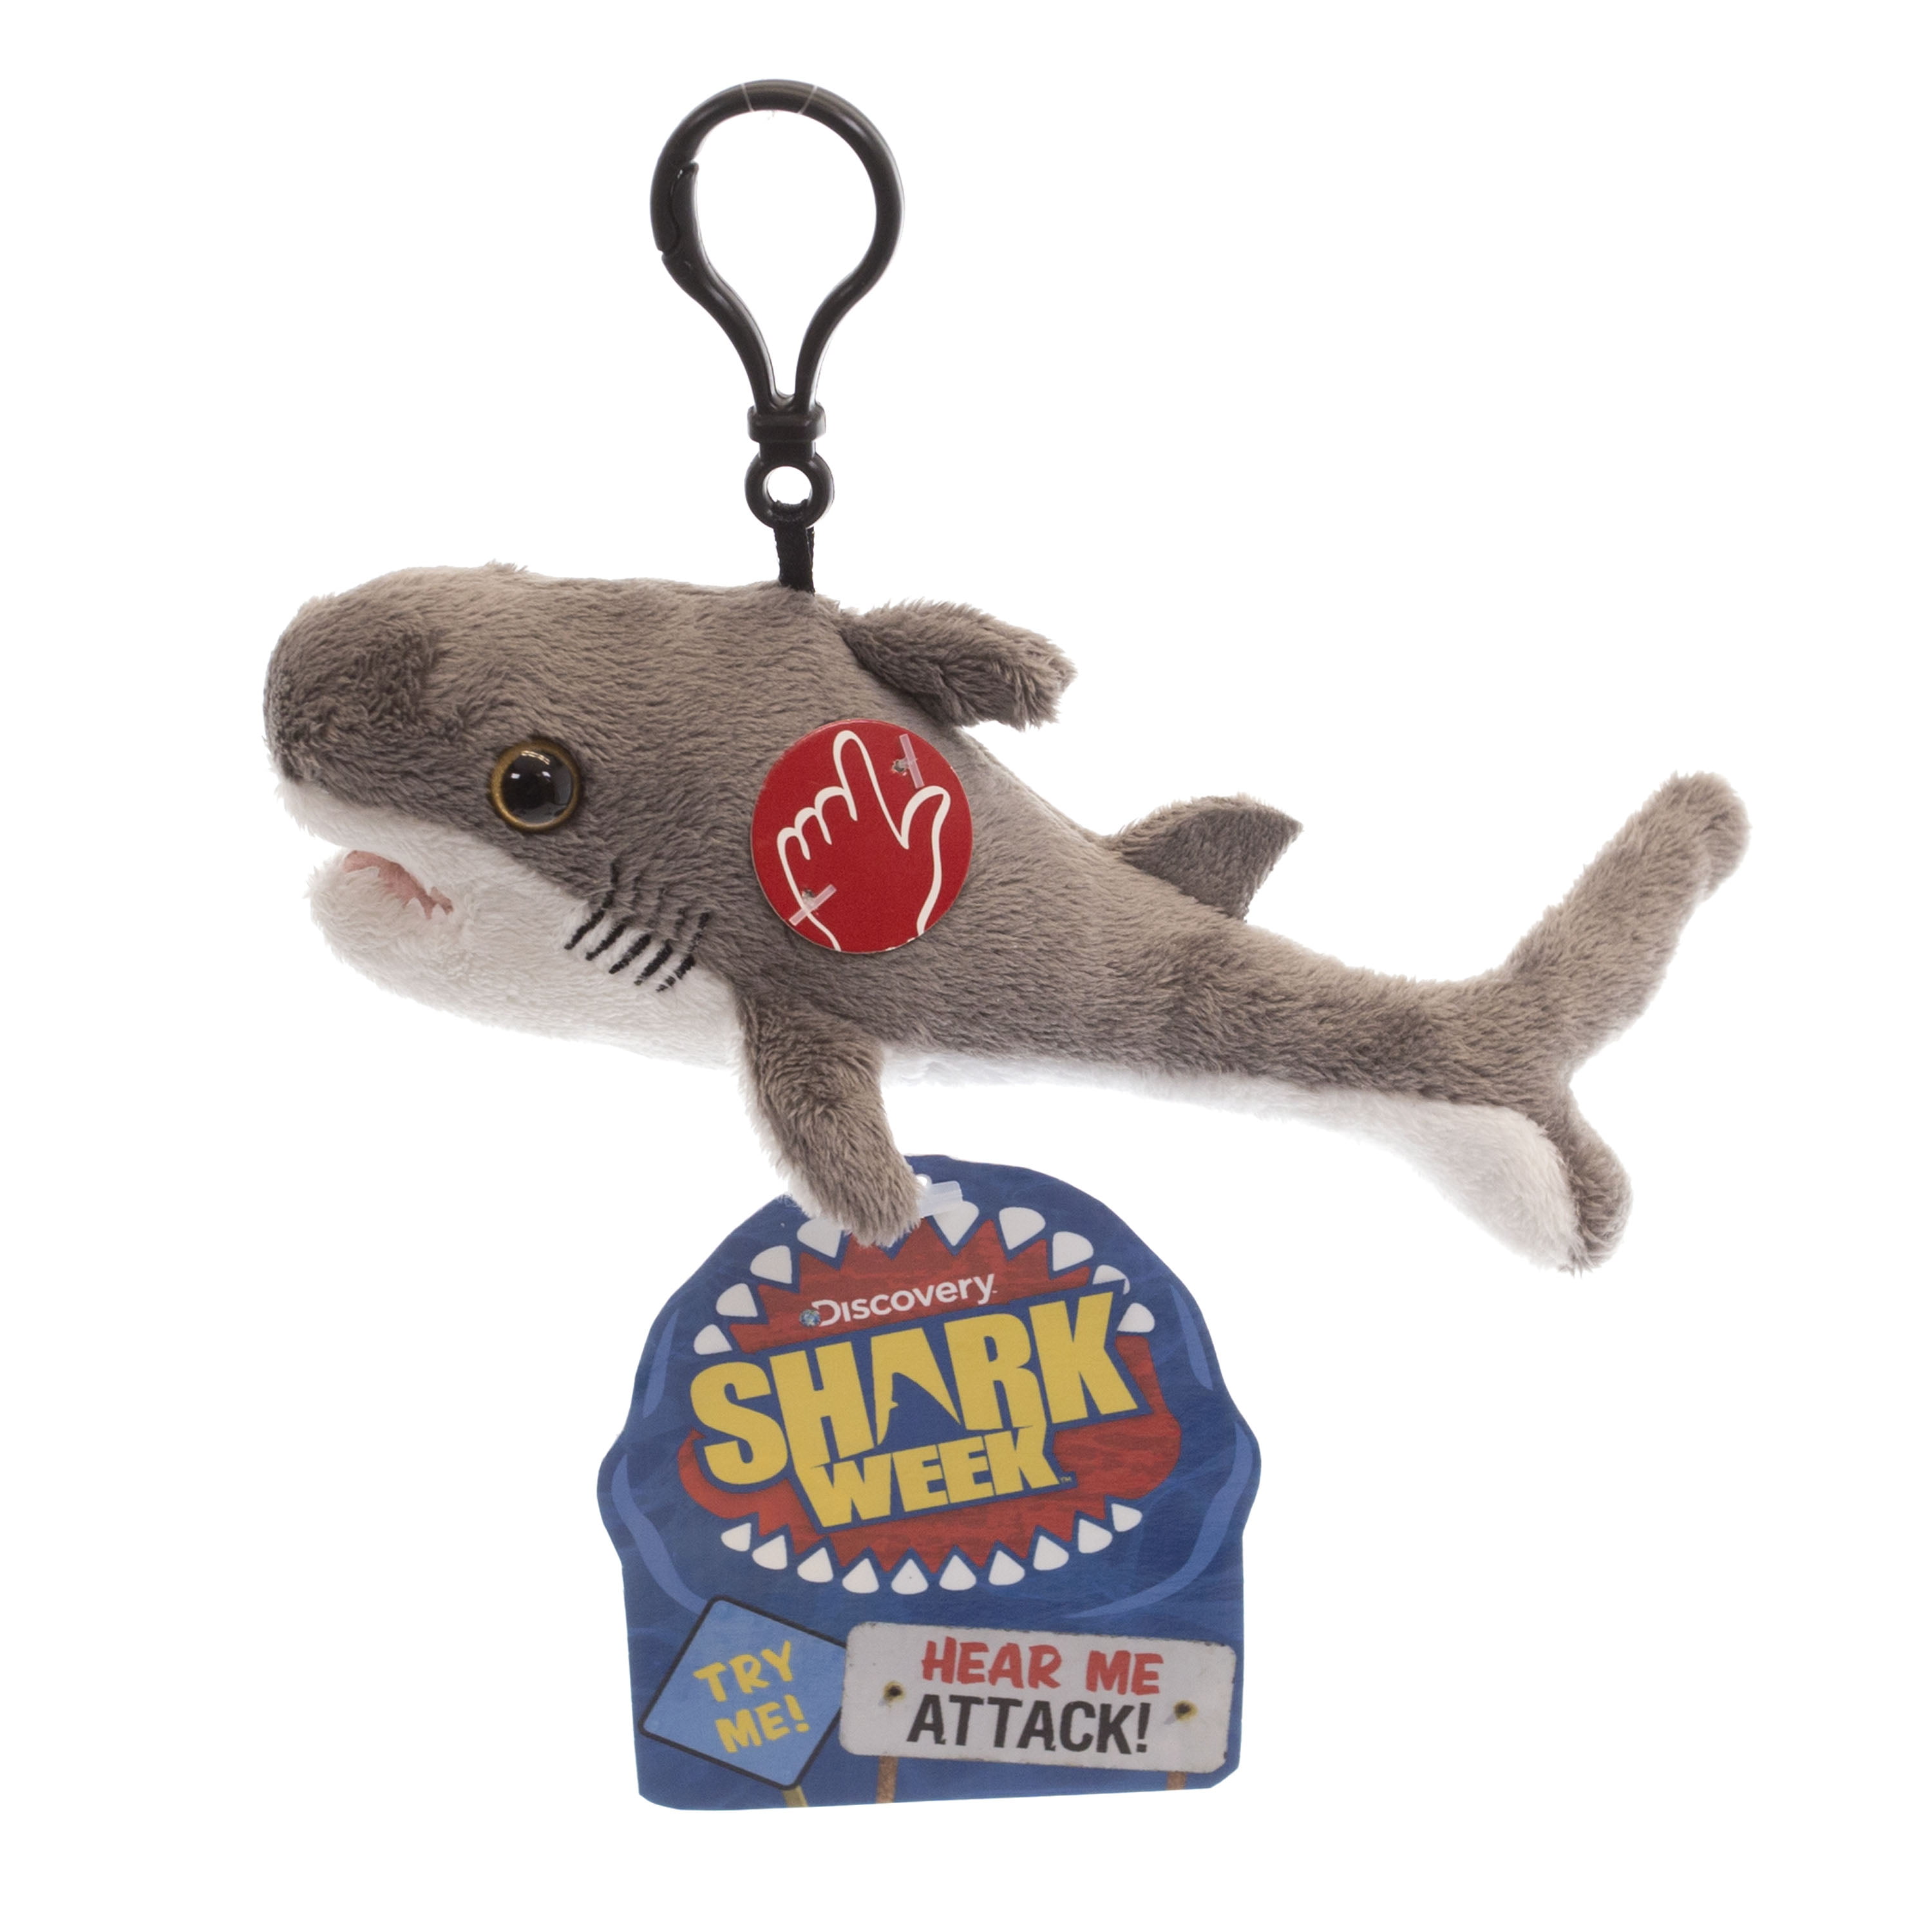 walmart stuffed shark